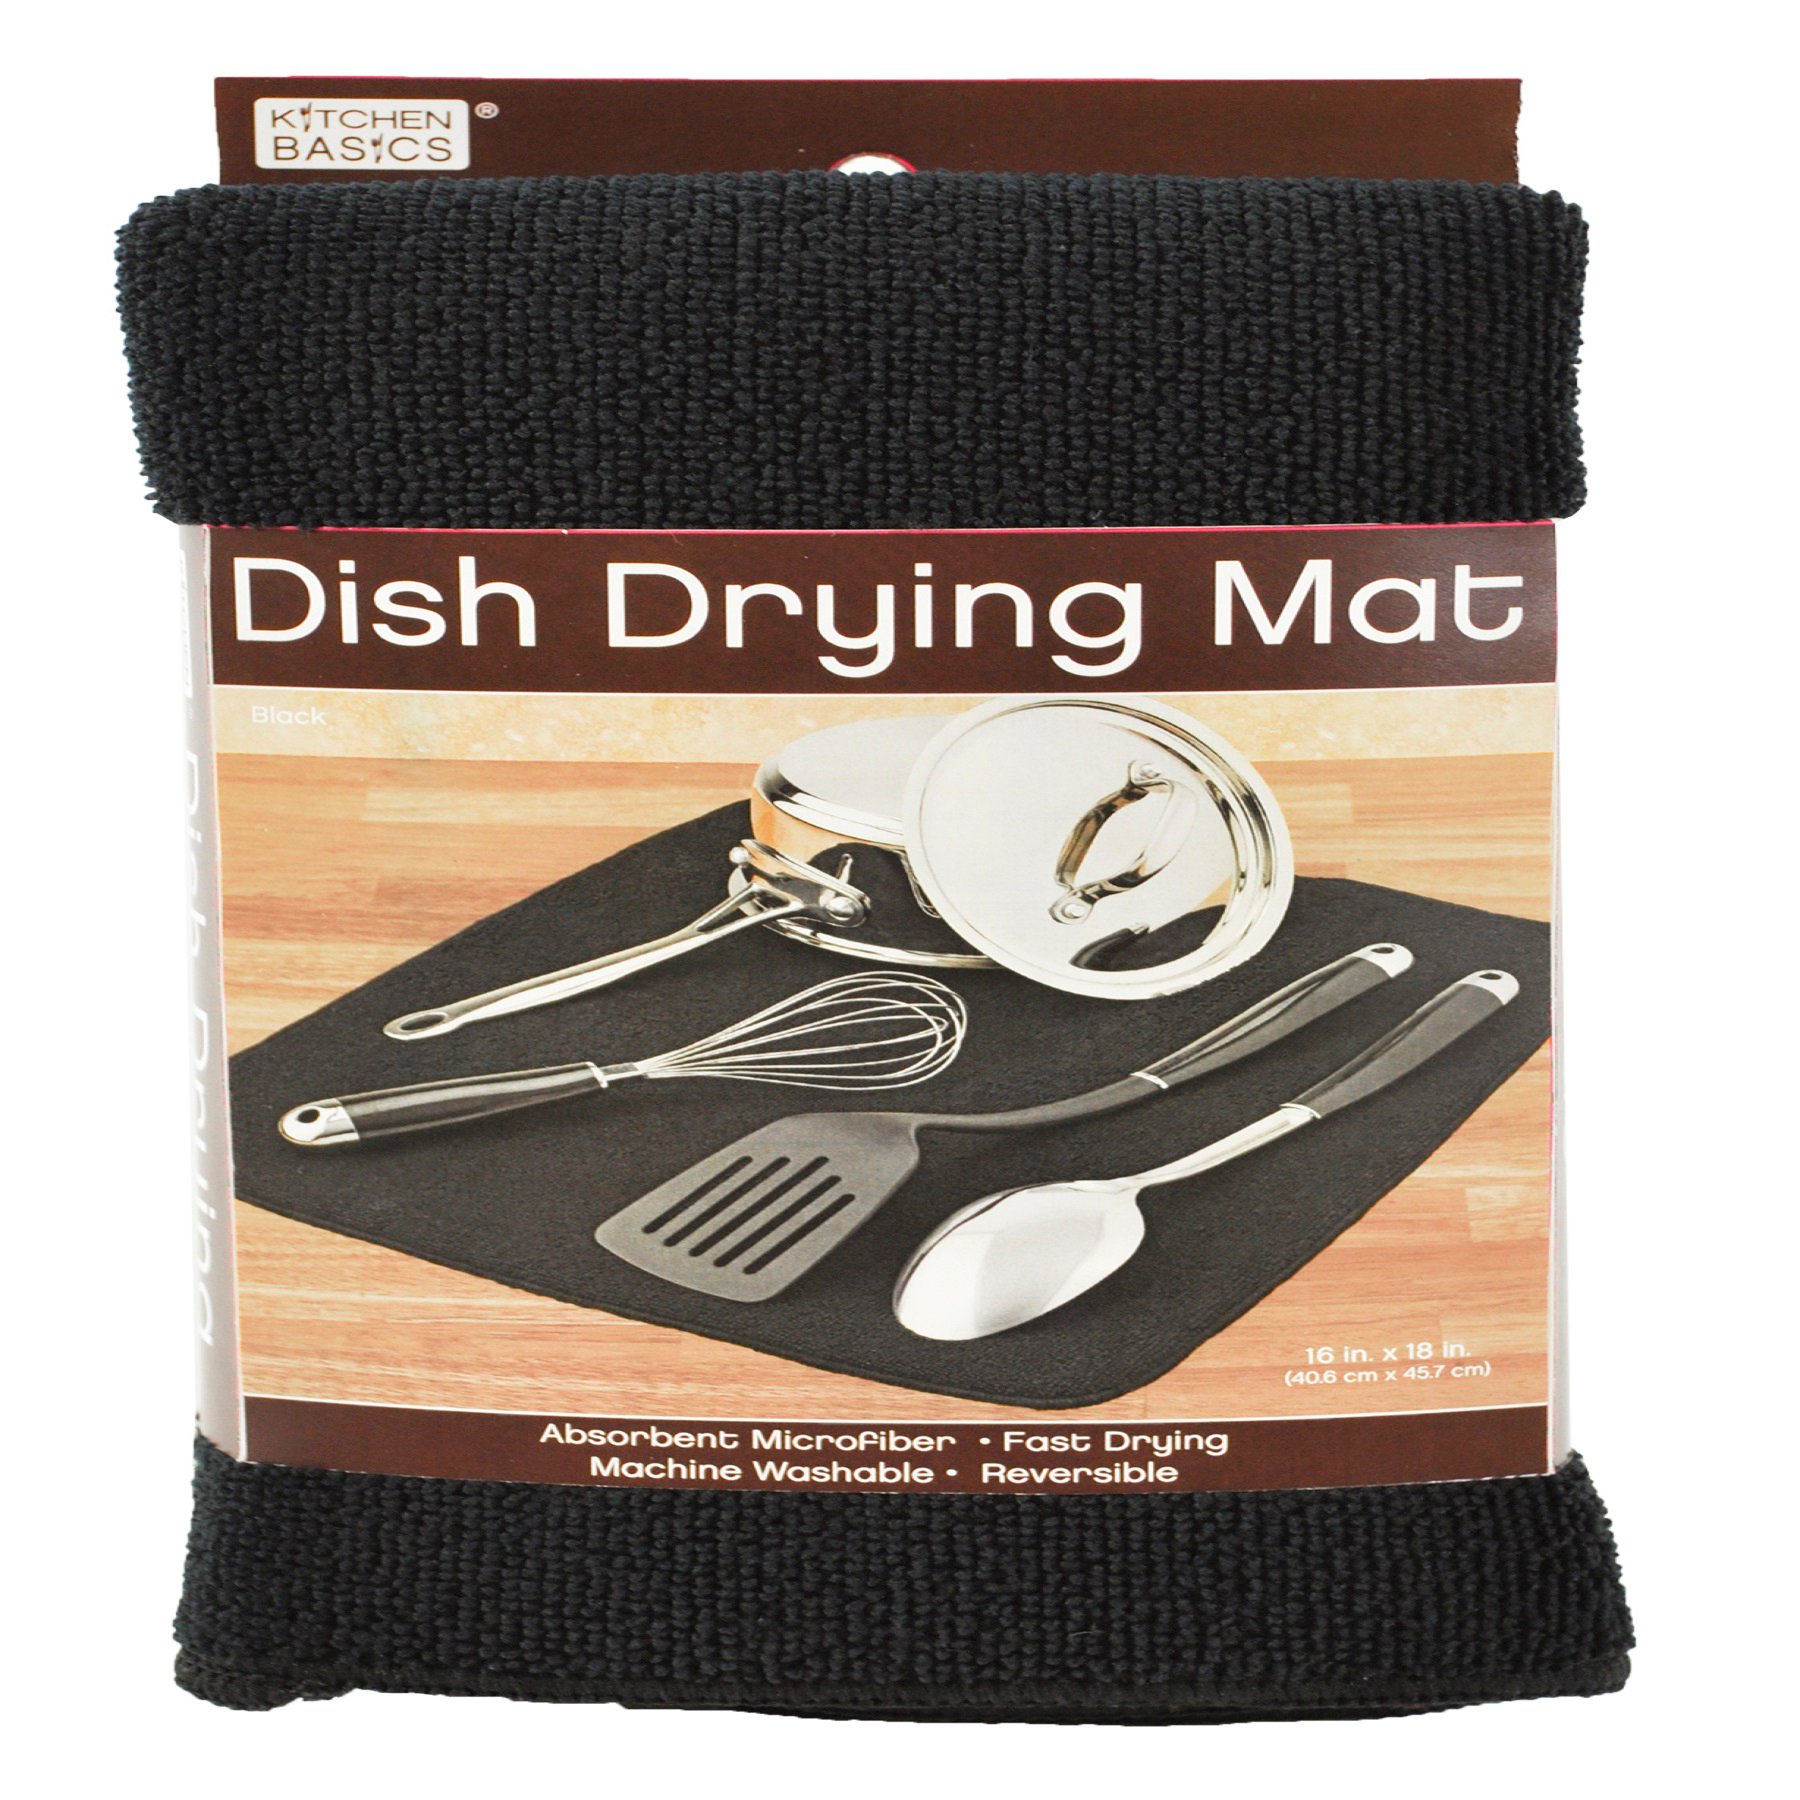 Kitchen Basics Dish Drying Mat 16x18 in - Shop Dish Drainers at H-E-B